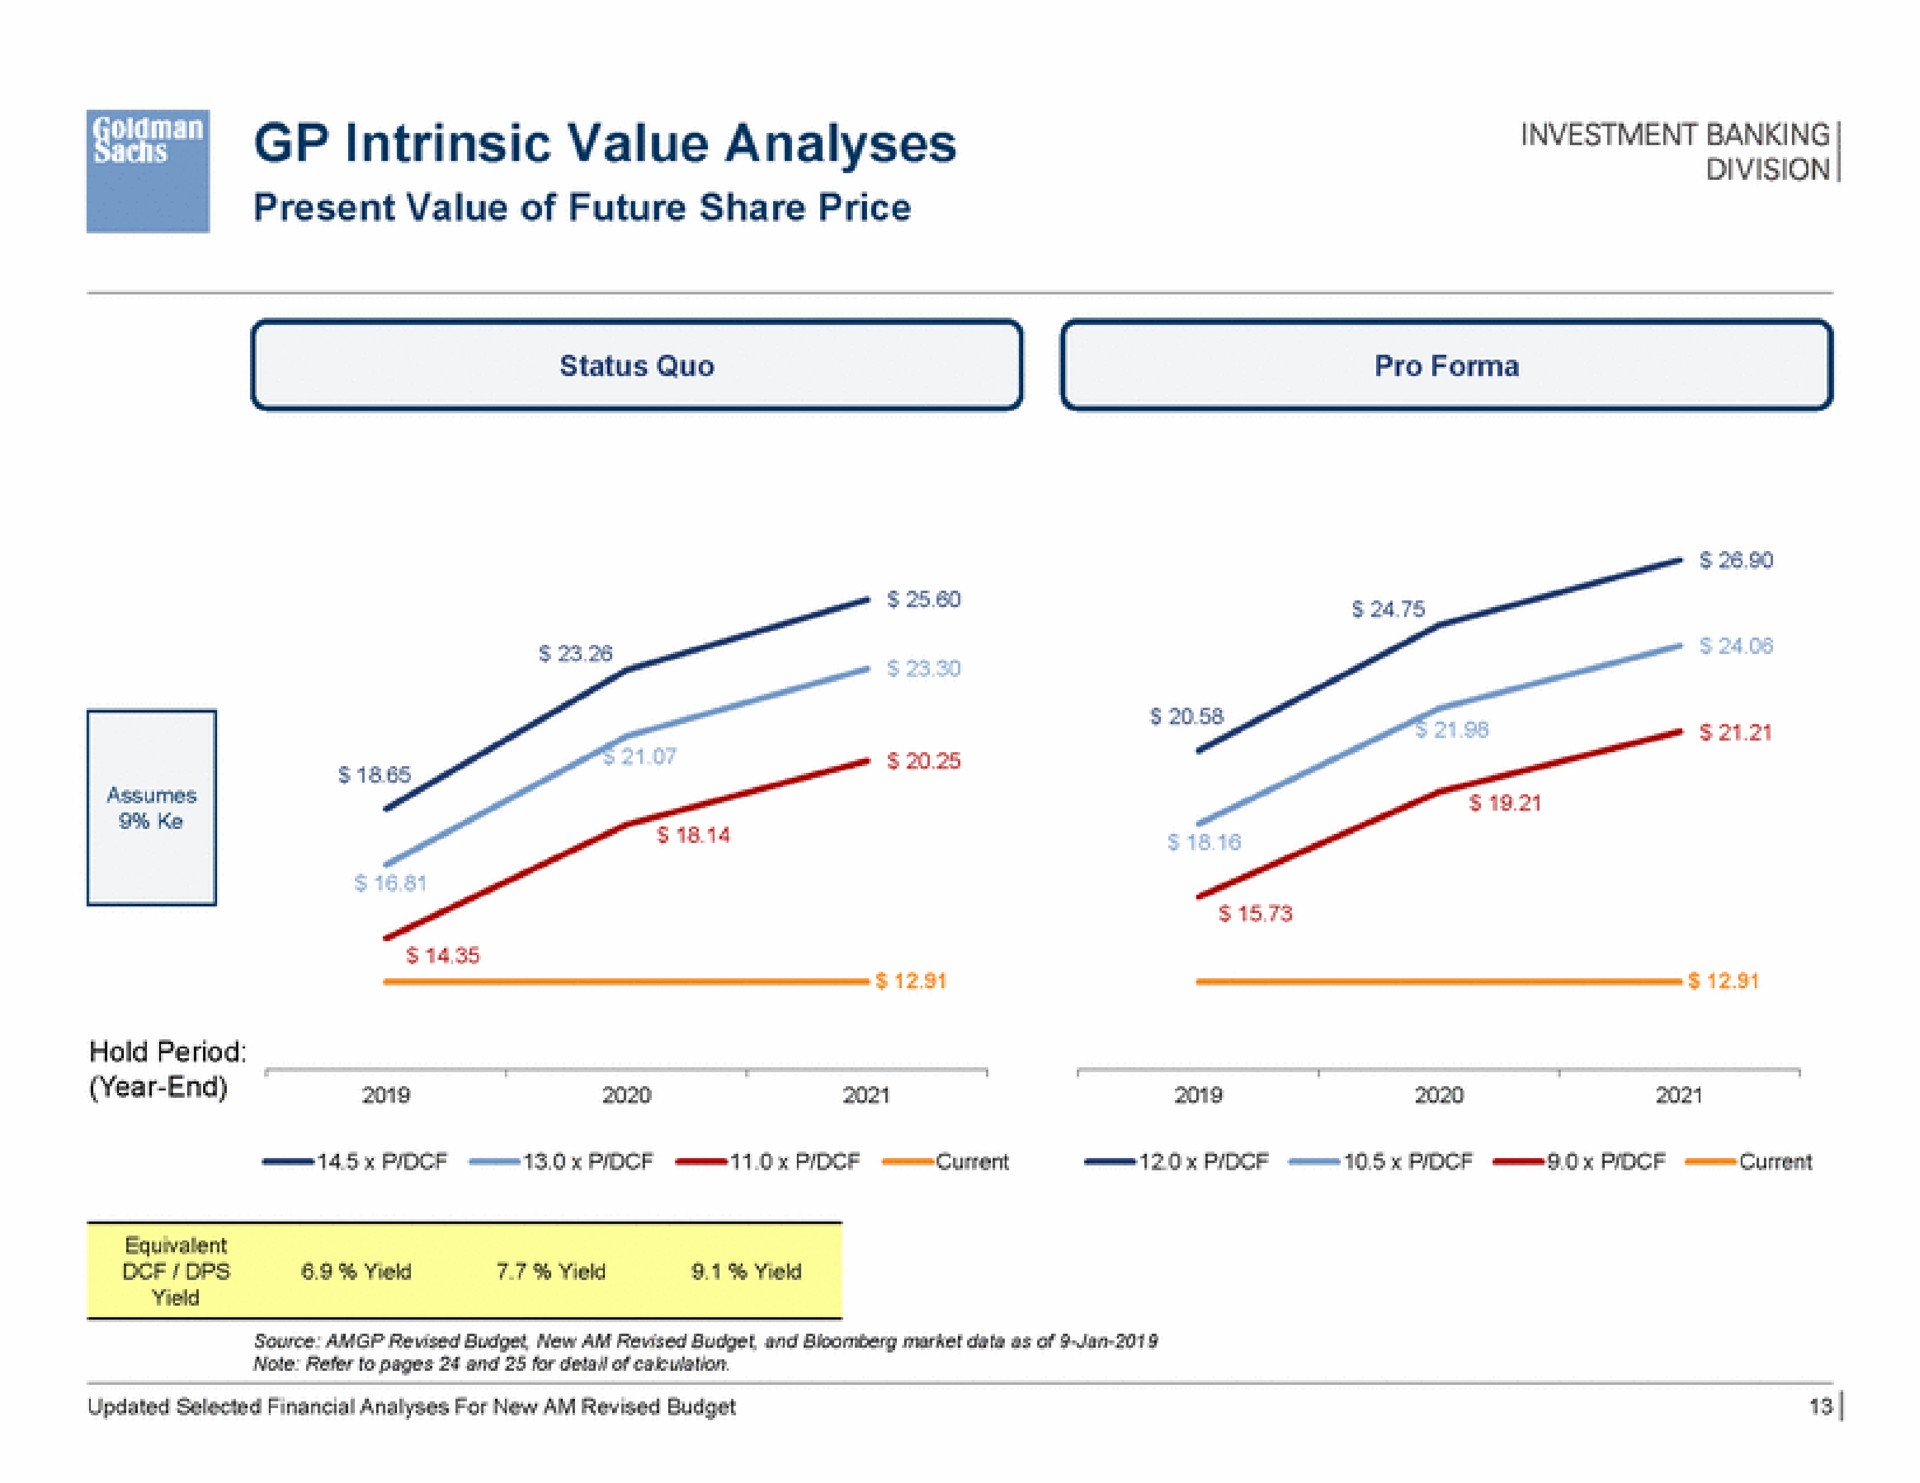 intrinsic value analyses me | Goldman Sachs